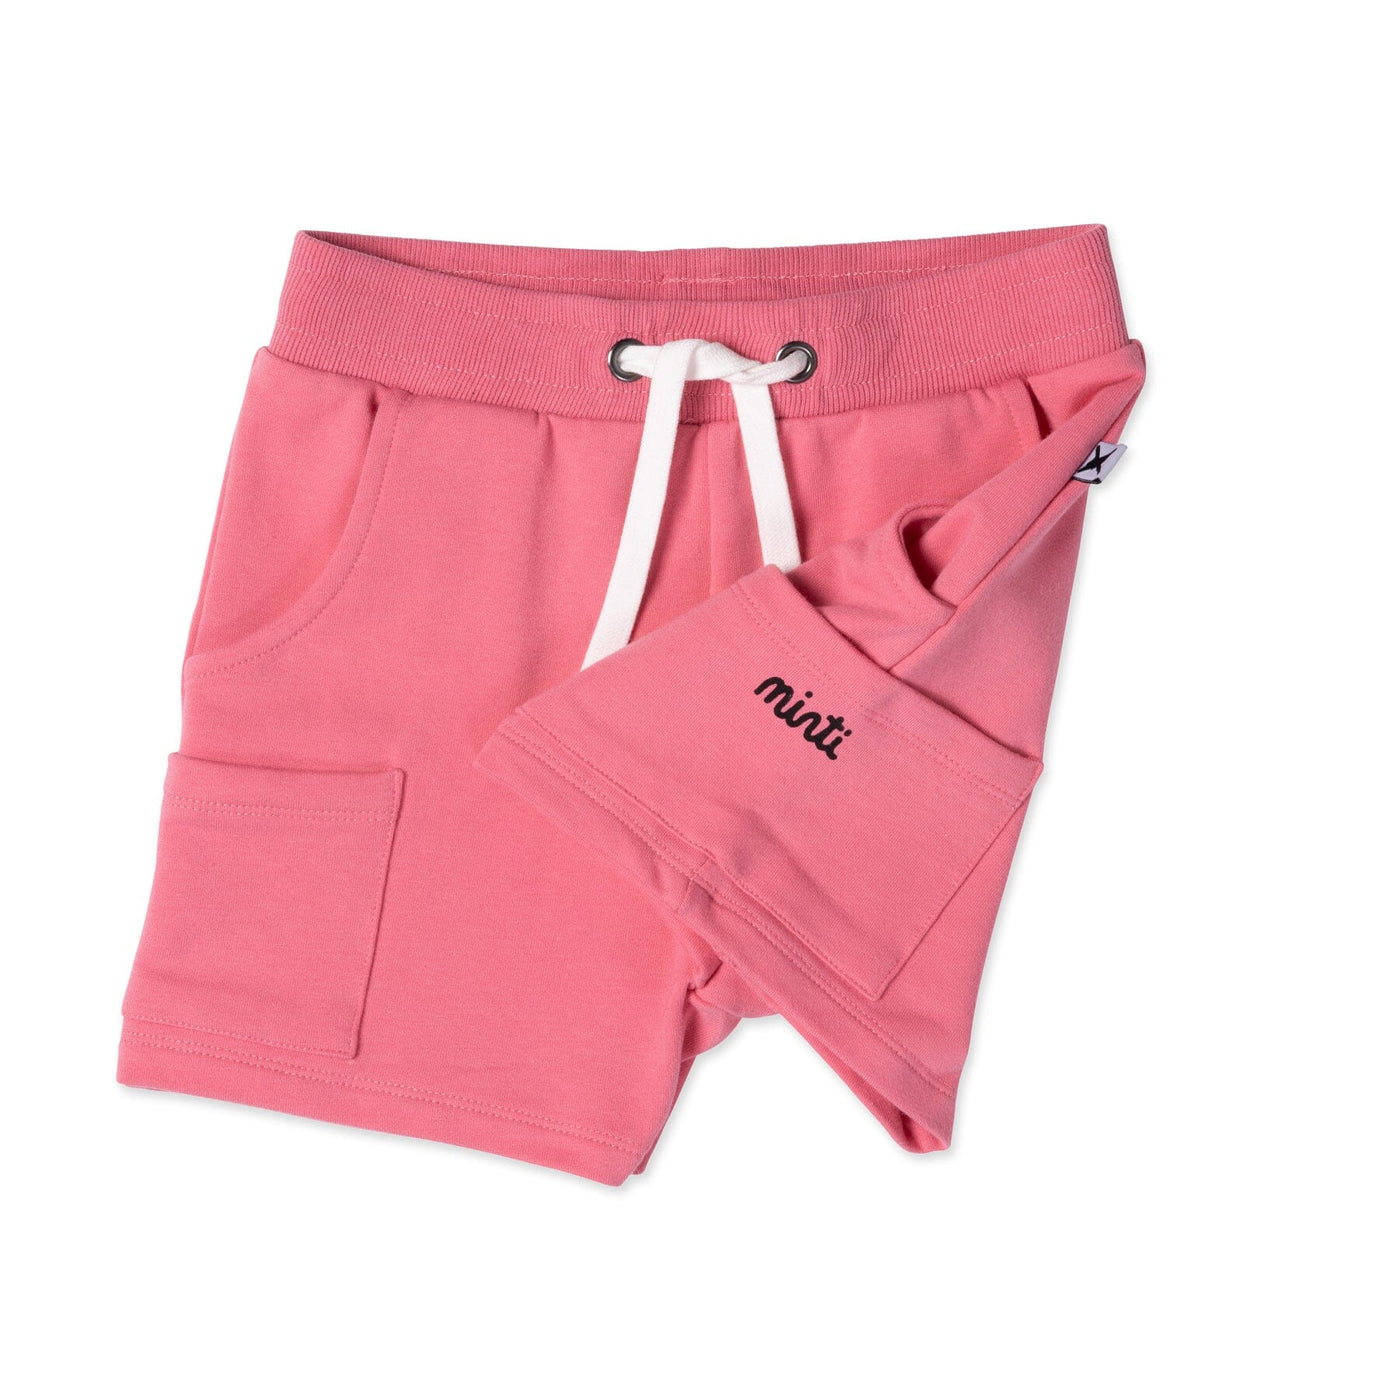 PREORDER Minti Pocket Short - Pink Shorts Minti 